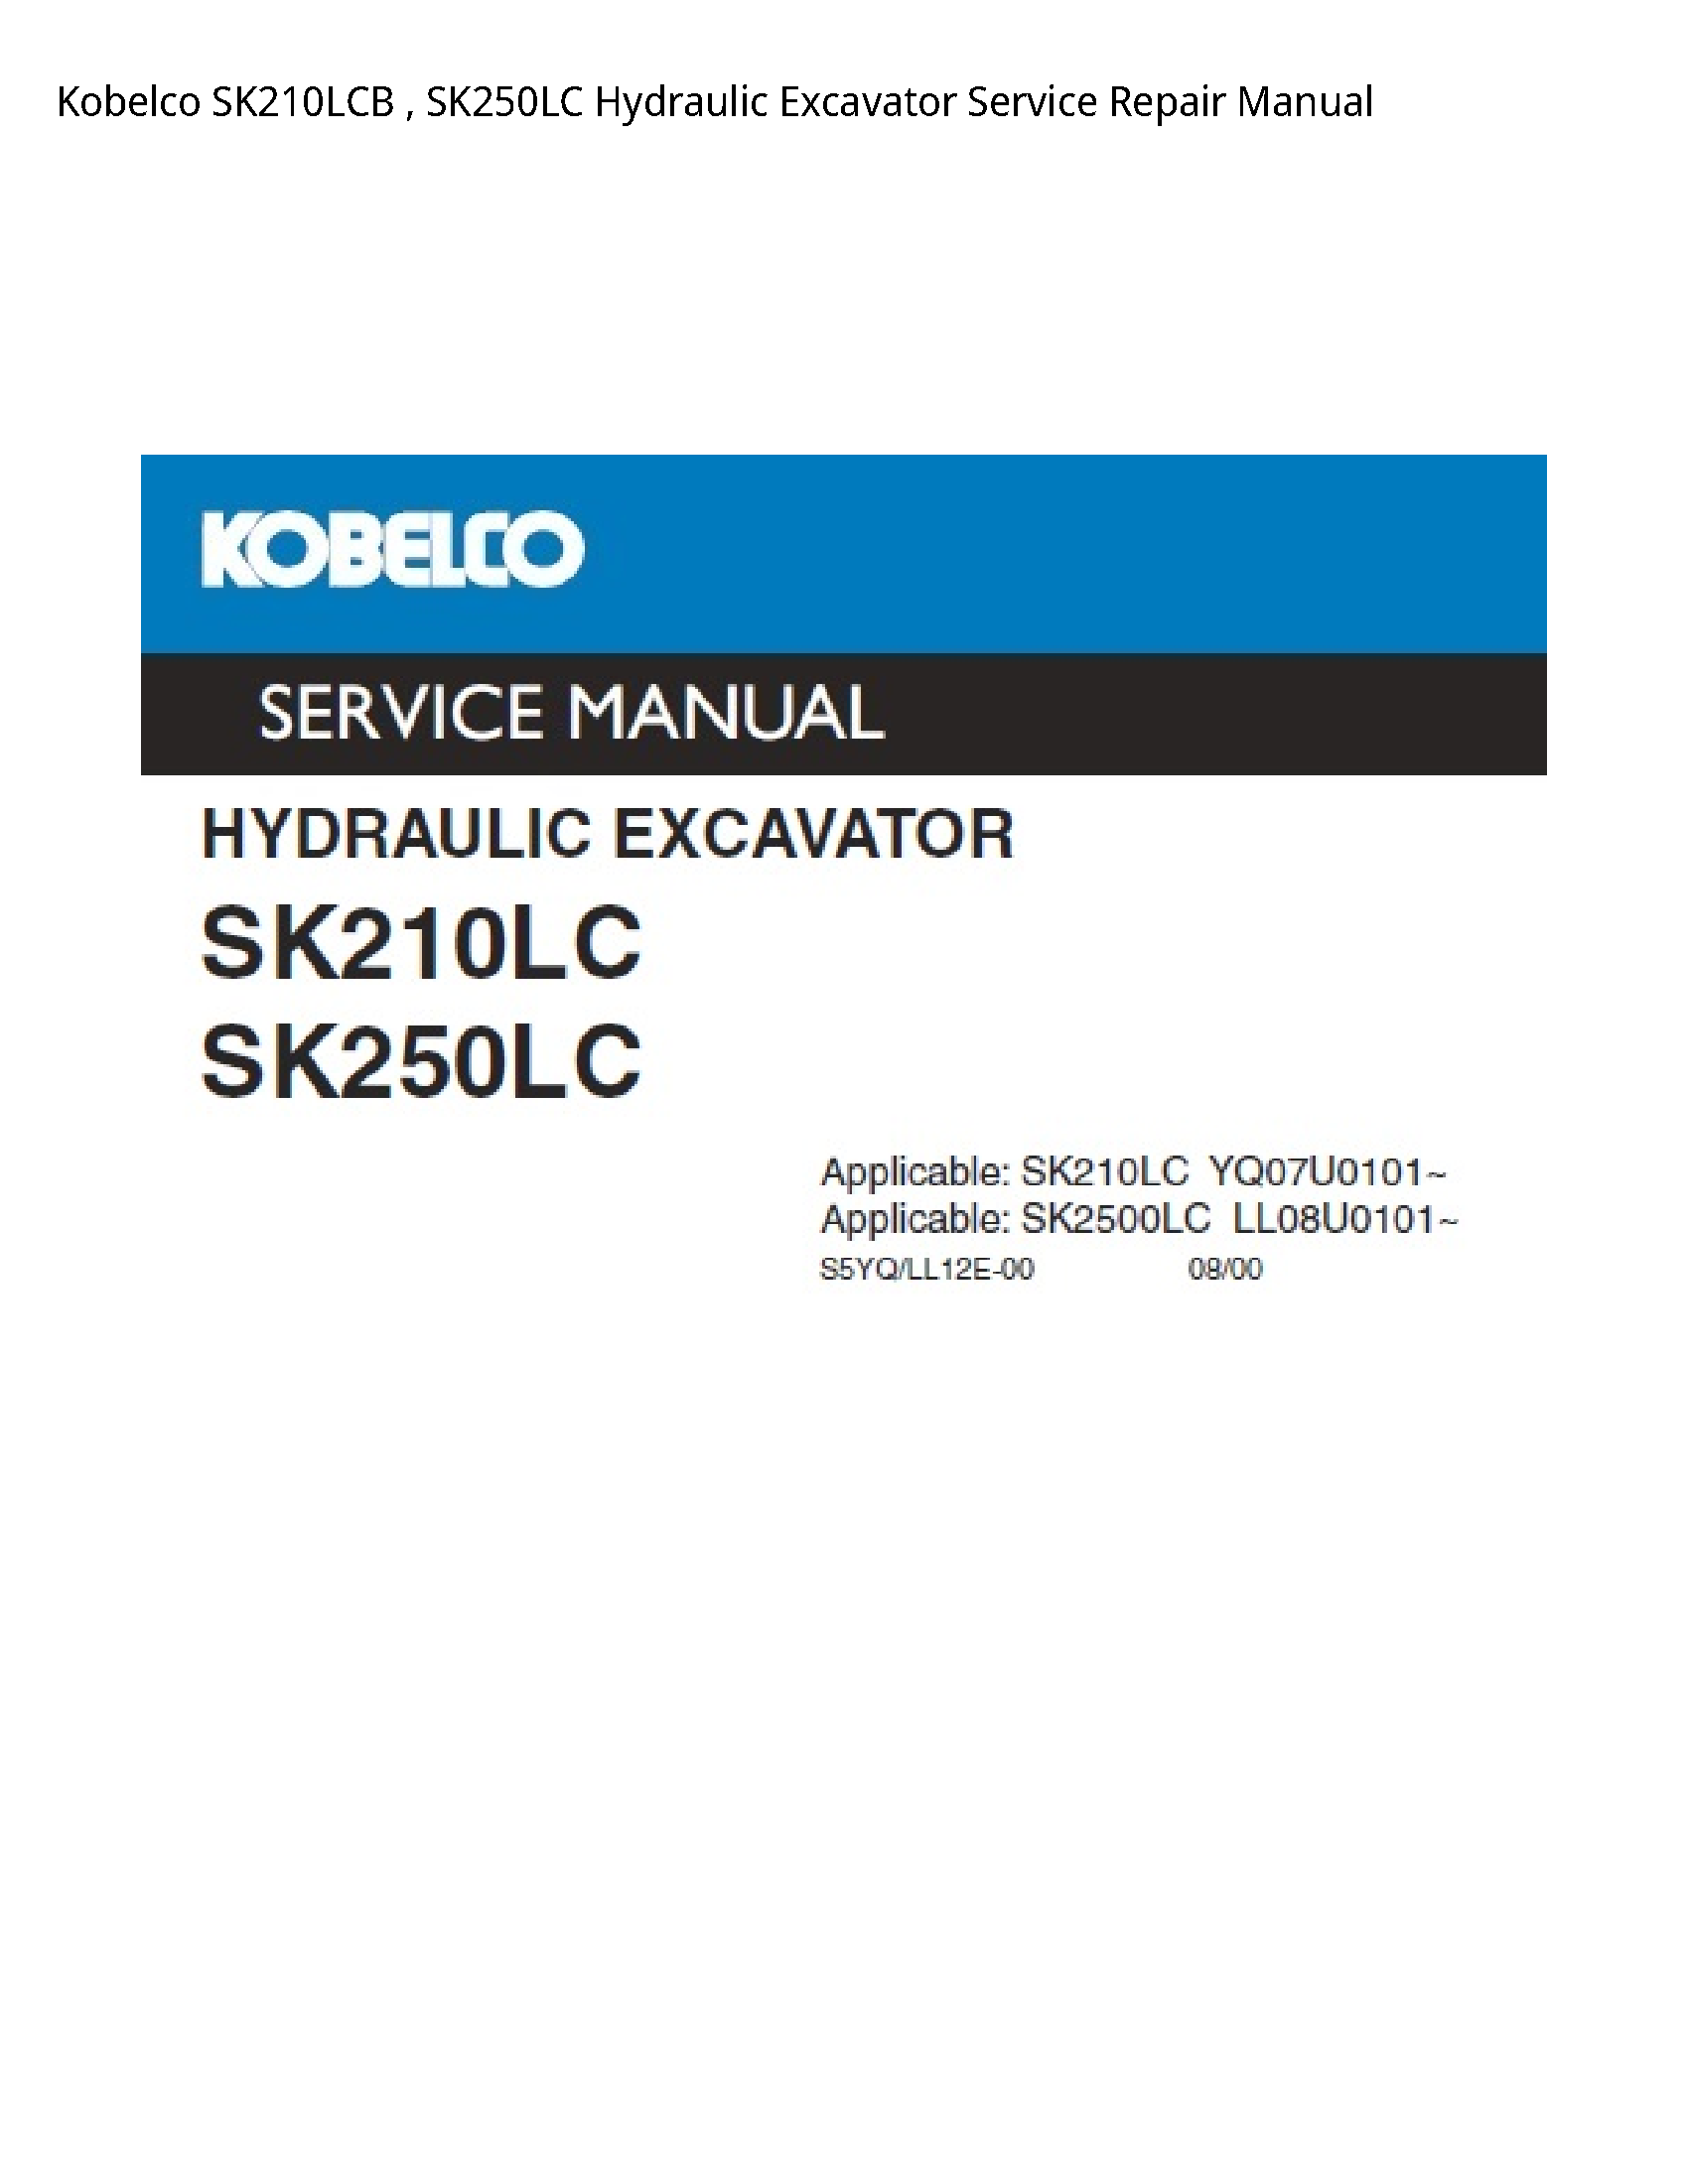 Kobelco SK210LCВ Hydraulic Excavator manual